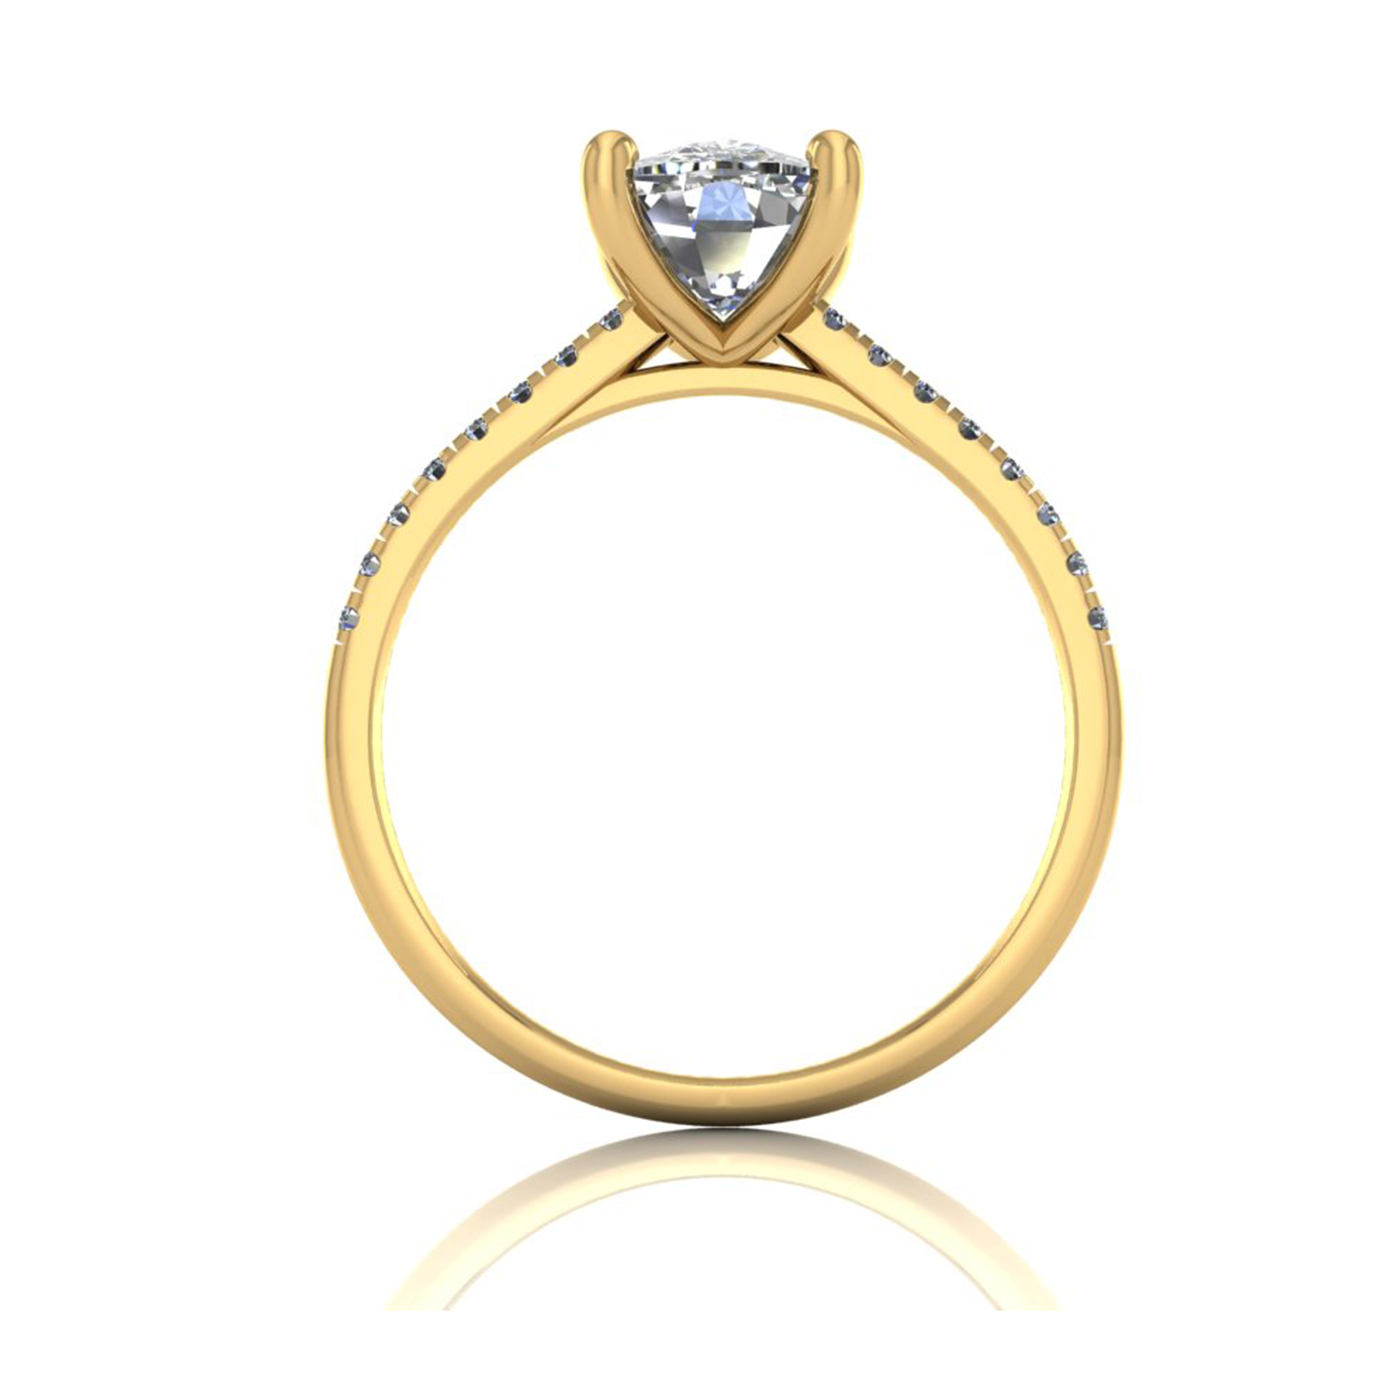 18k yellow gold  4 prongs cushion cut diamond engagement ring with whisper thin pavÉ set band